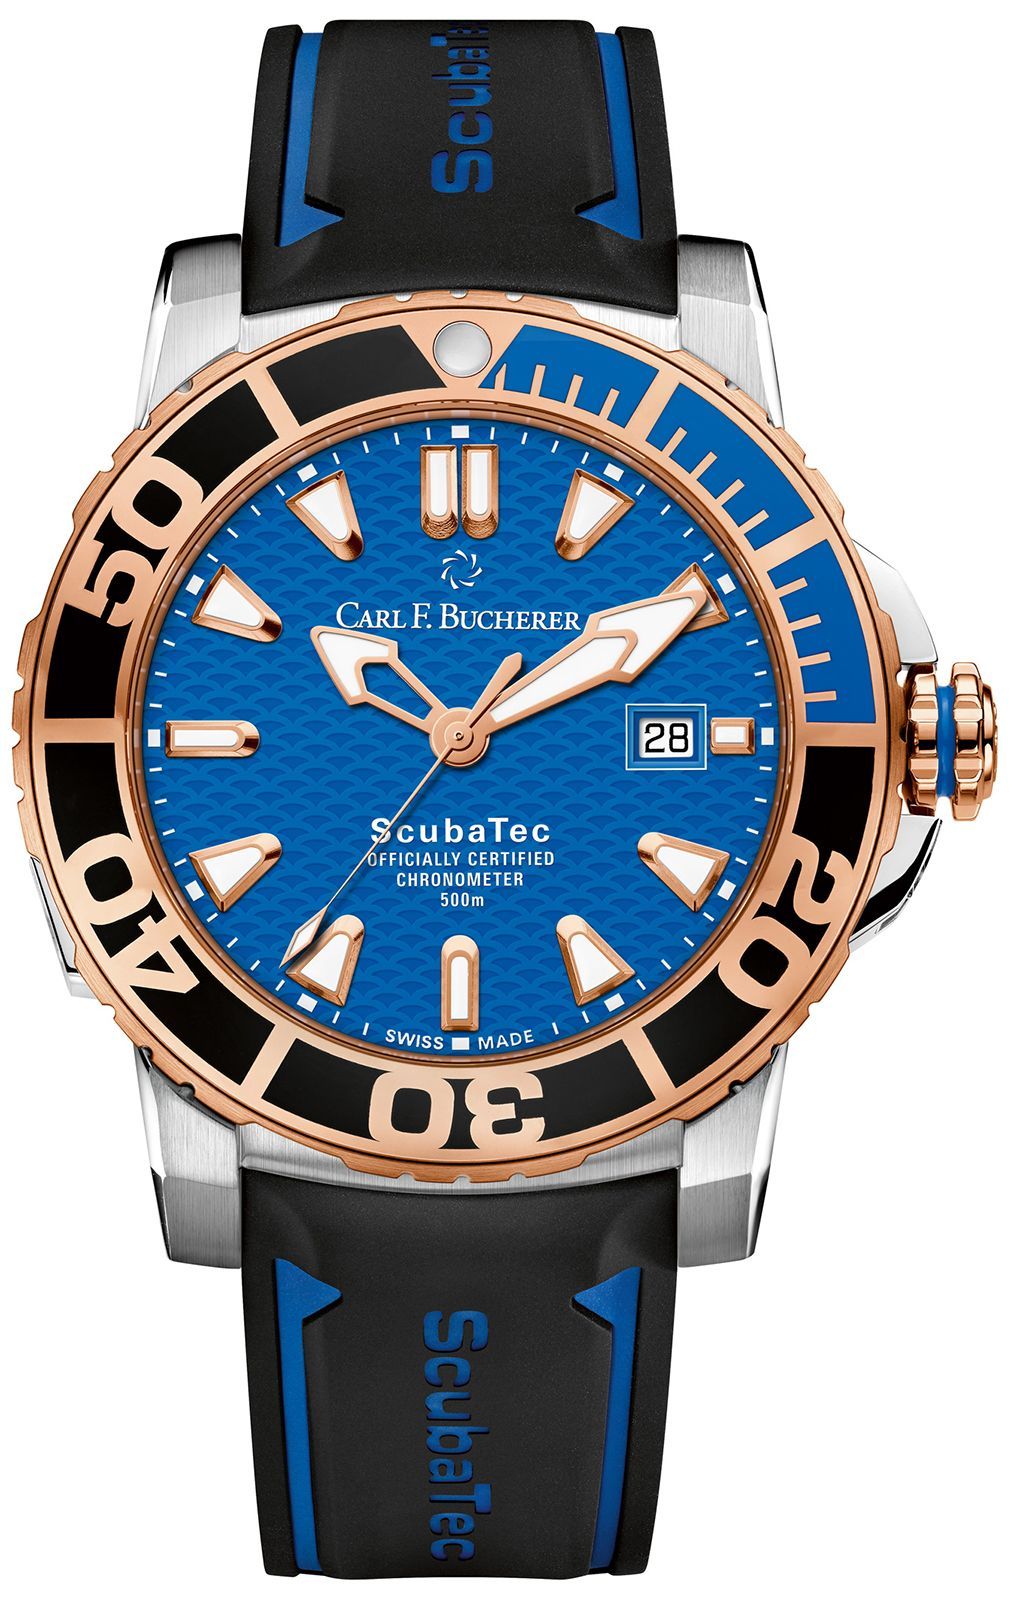 Carl F. Bucherer ScubaTec 44.6 mm Watch in Blue Dial For Men - 1